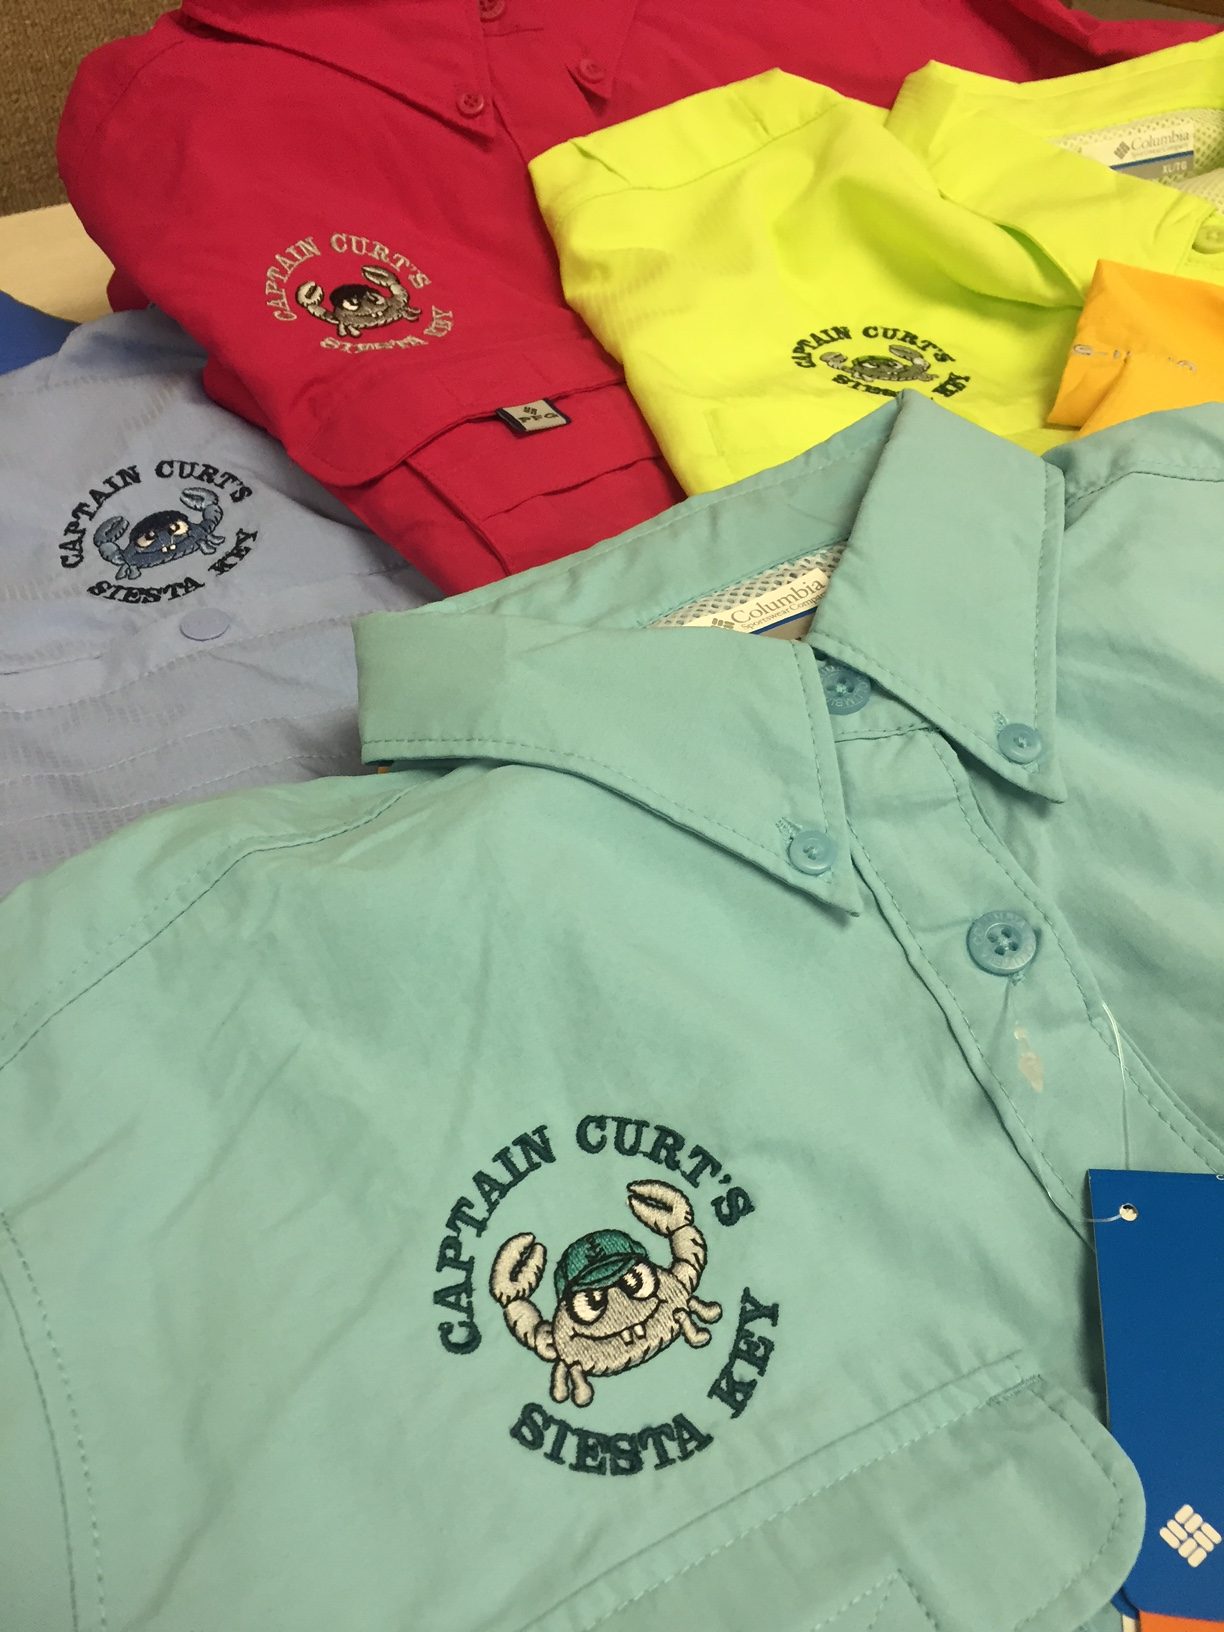 https://www.koalatee.com/wp-content/uploads/2016/04/Captain-Curts-Embroidered-Fishing-Shirts-e1484945229380.jpg